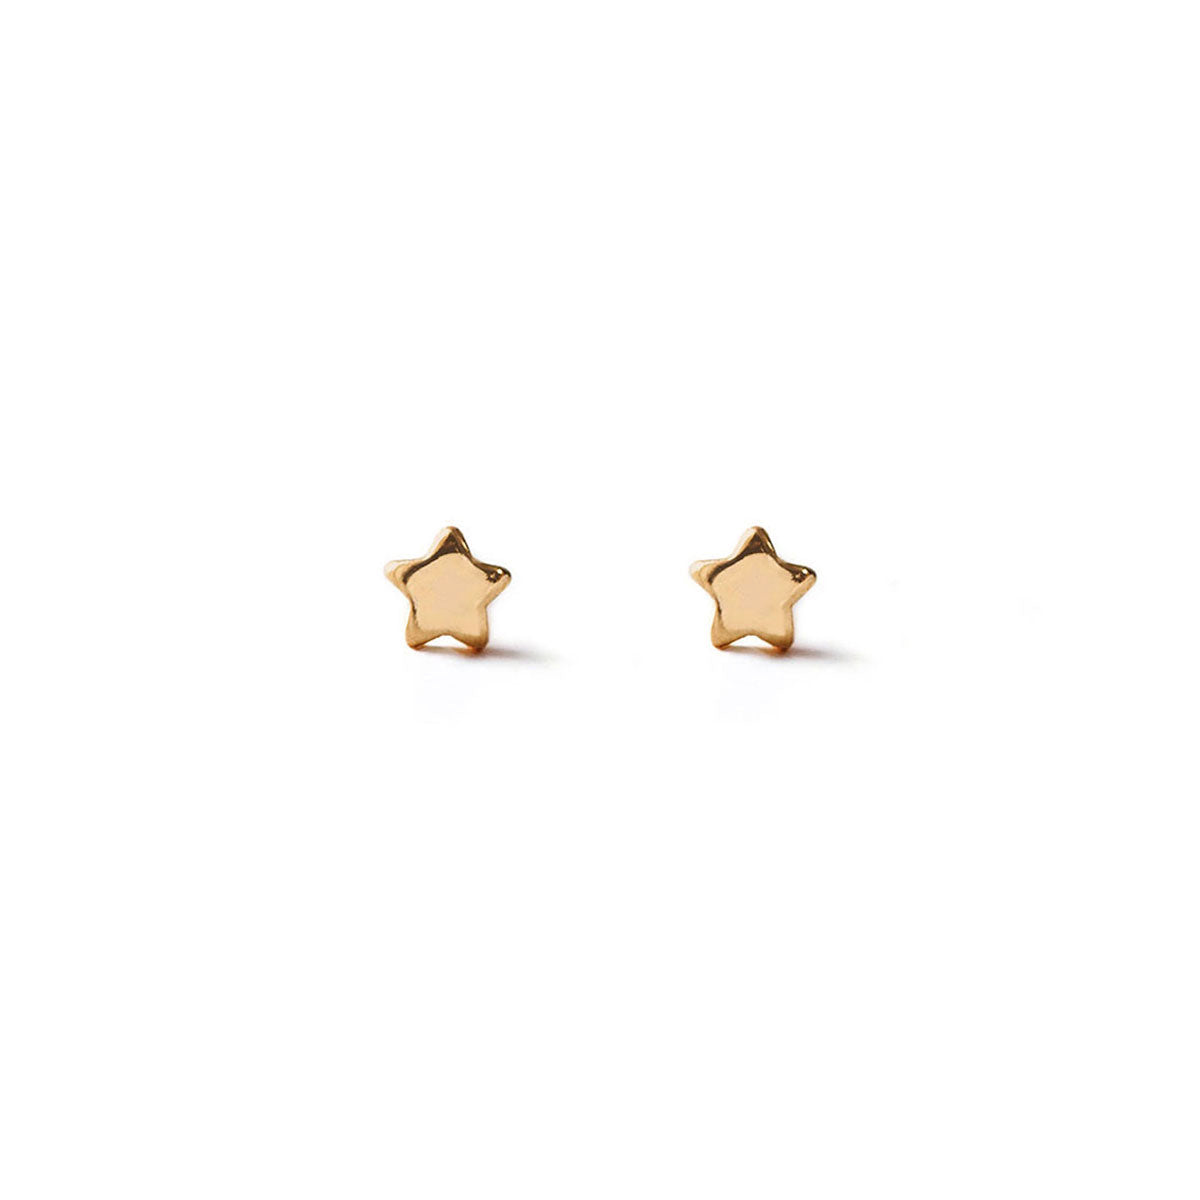 SS Teenie Tiny Star 3mm Pink CZ Screw Back Earrings – Olly-Olly